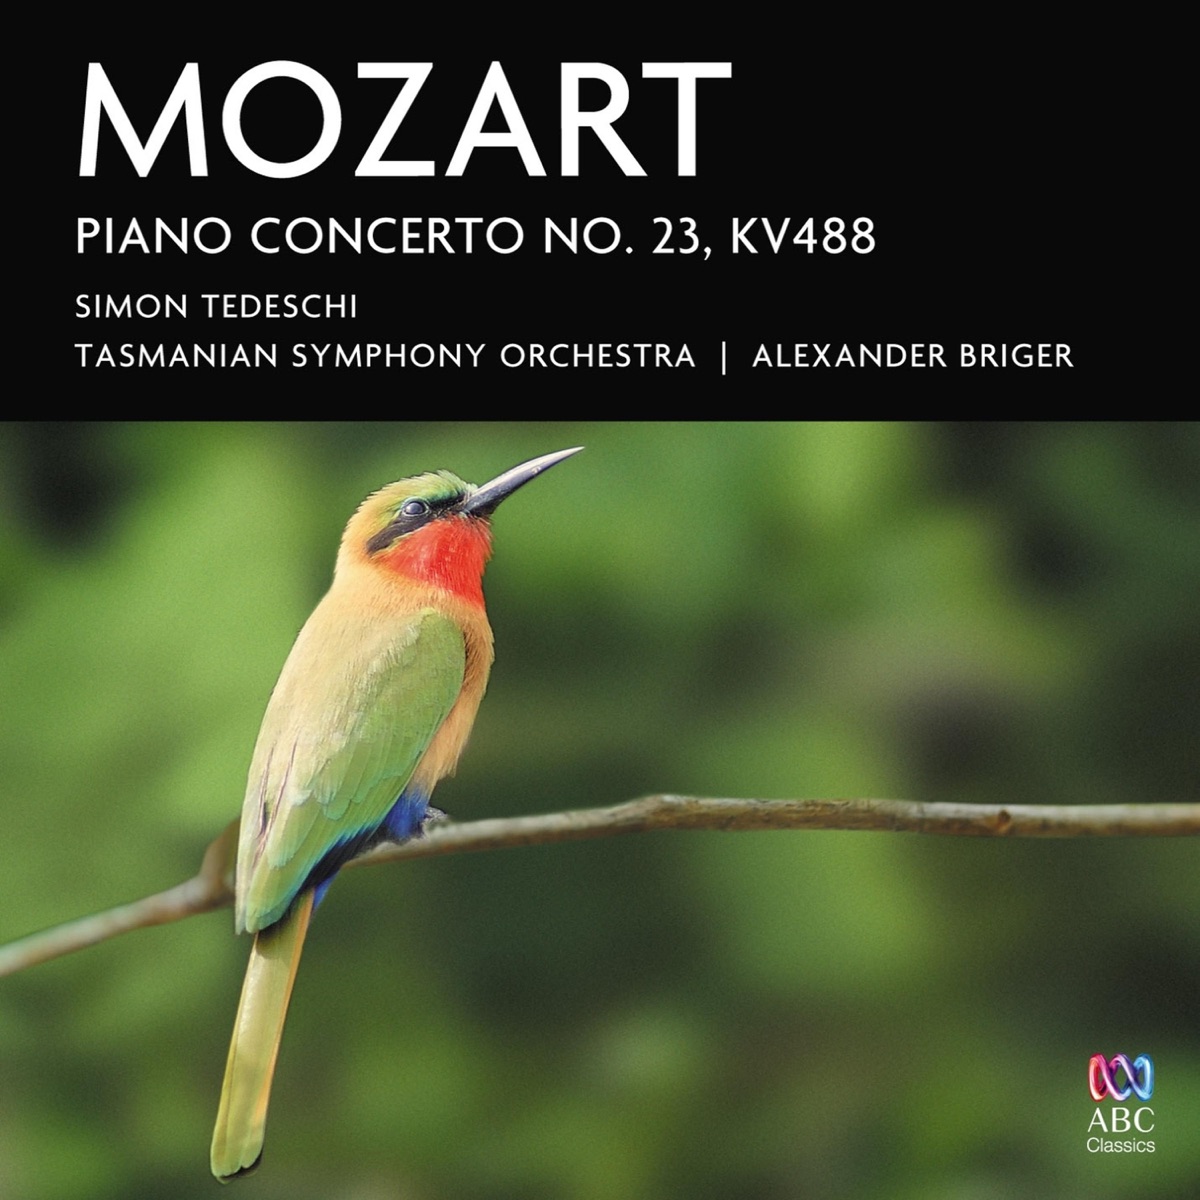 Mozart Piano Concerto No. 23 K. 488 - EP by Simon Tedeschi, Tasmanian  Symphony Orchestra & Alexander Briger on Apple Music